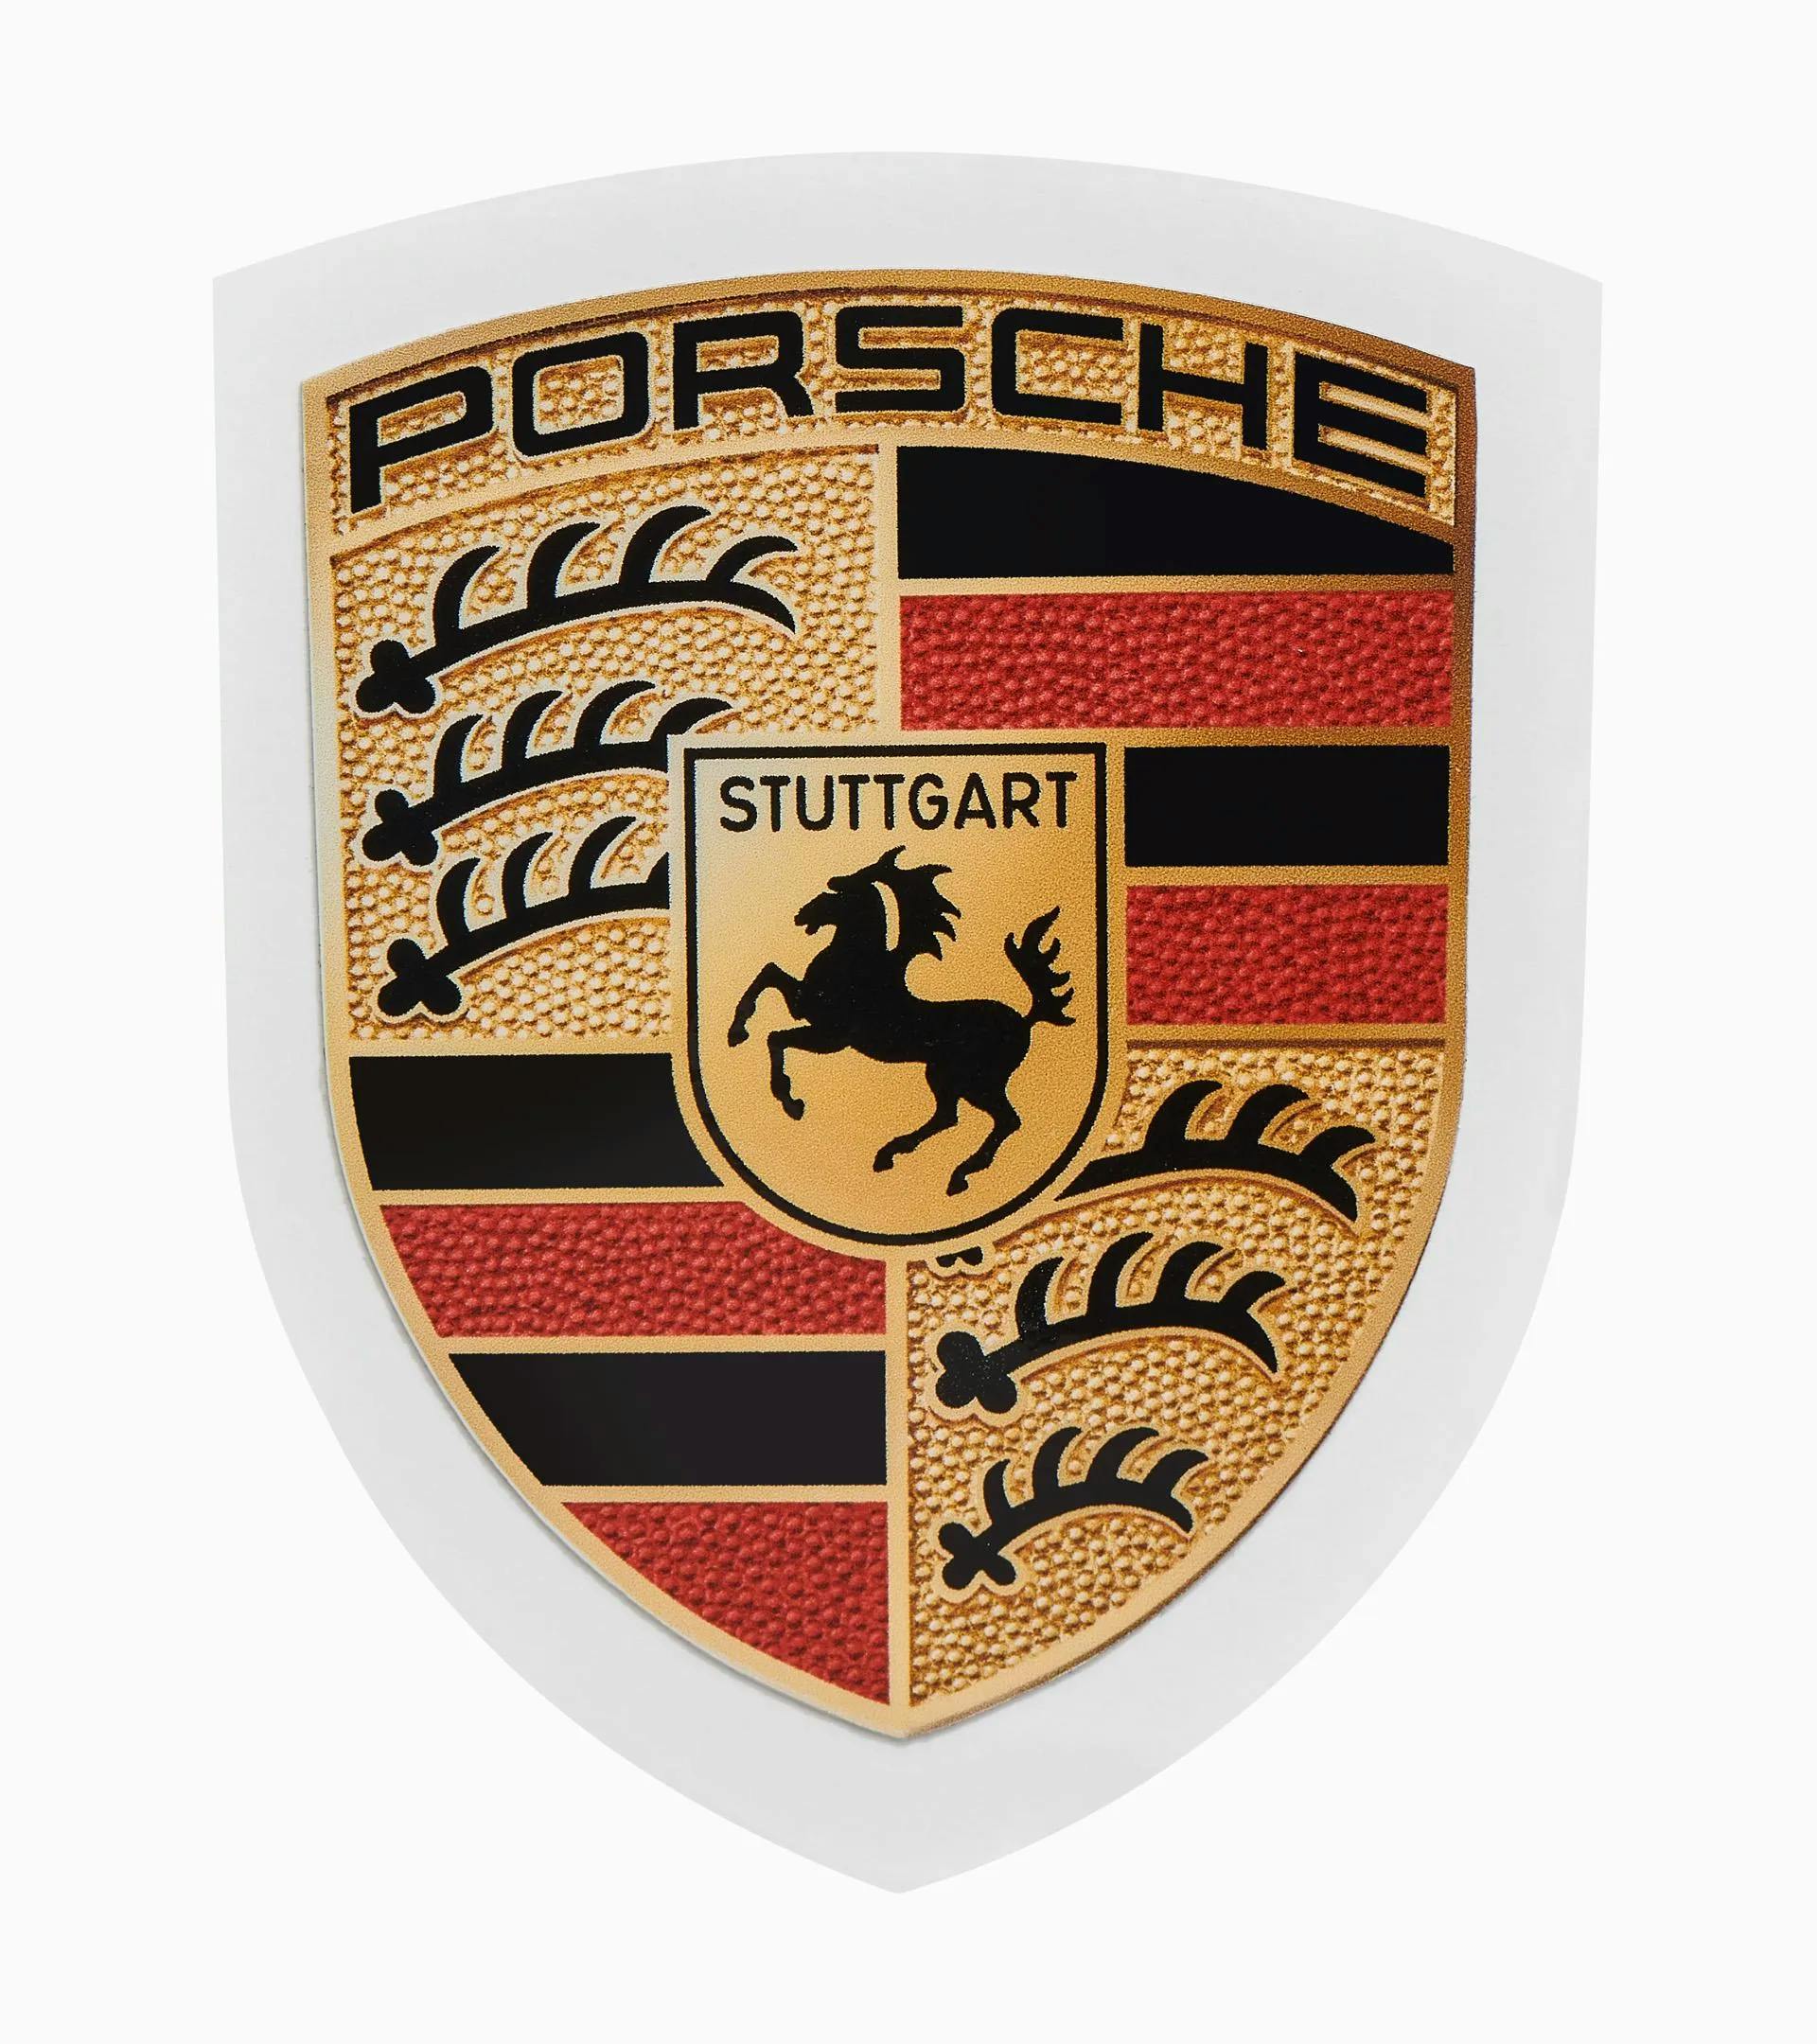 Original Porsche Emblem Coat Of Arms Logo Adhesive Label Sticker 6.5 X 5 cm